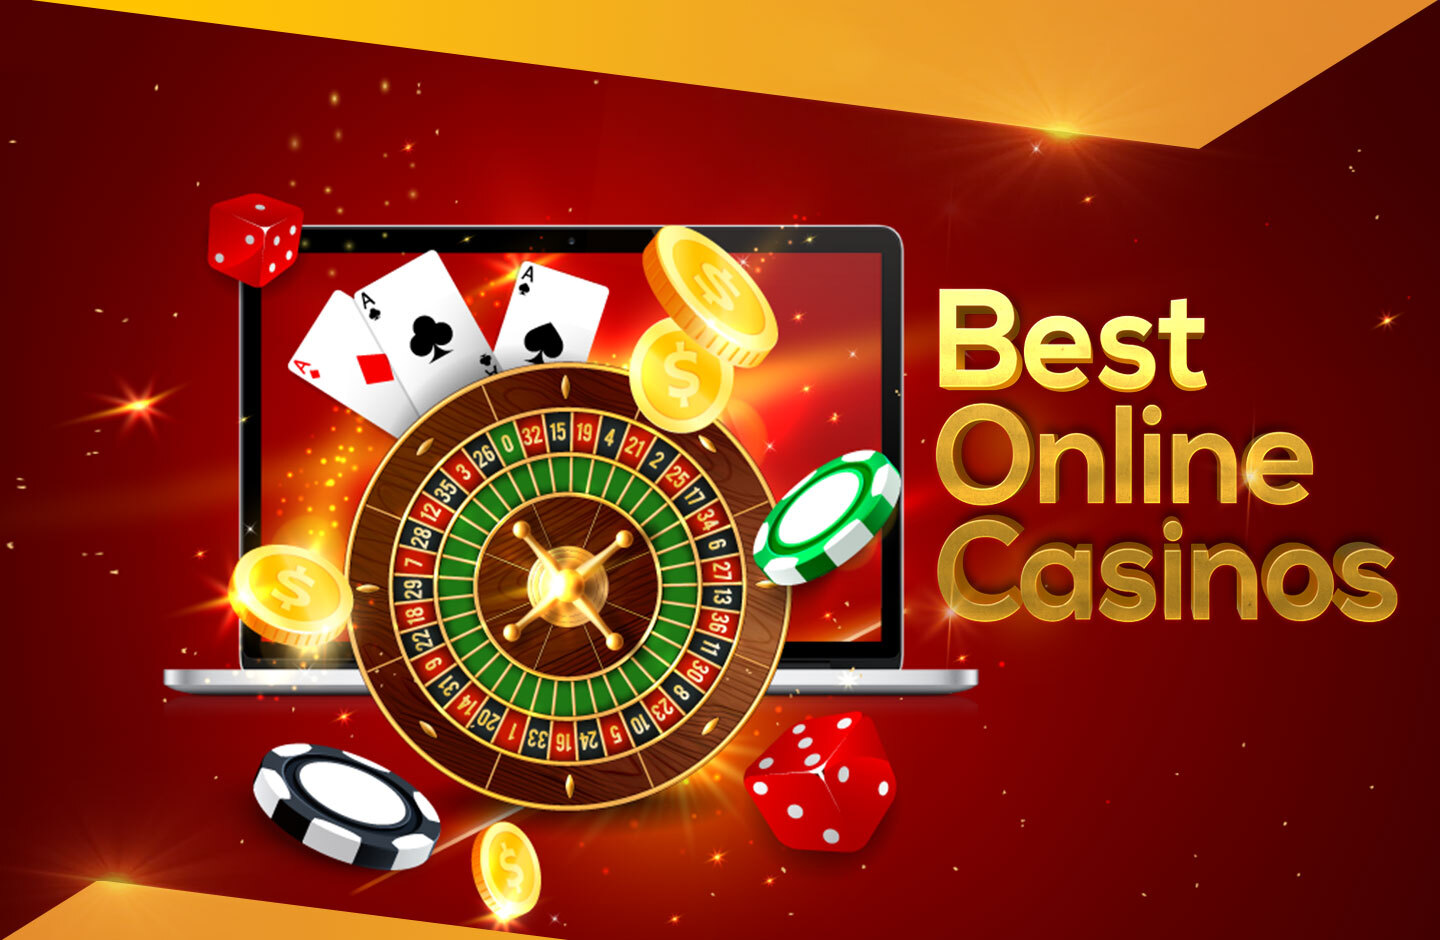 Slot Machine Gambling Online The Modern Gambler’s Playground